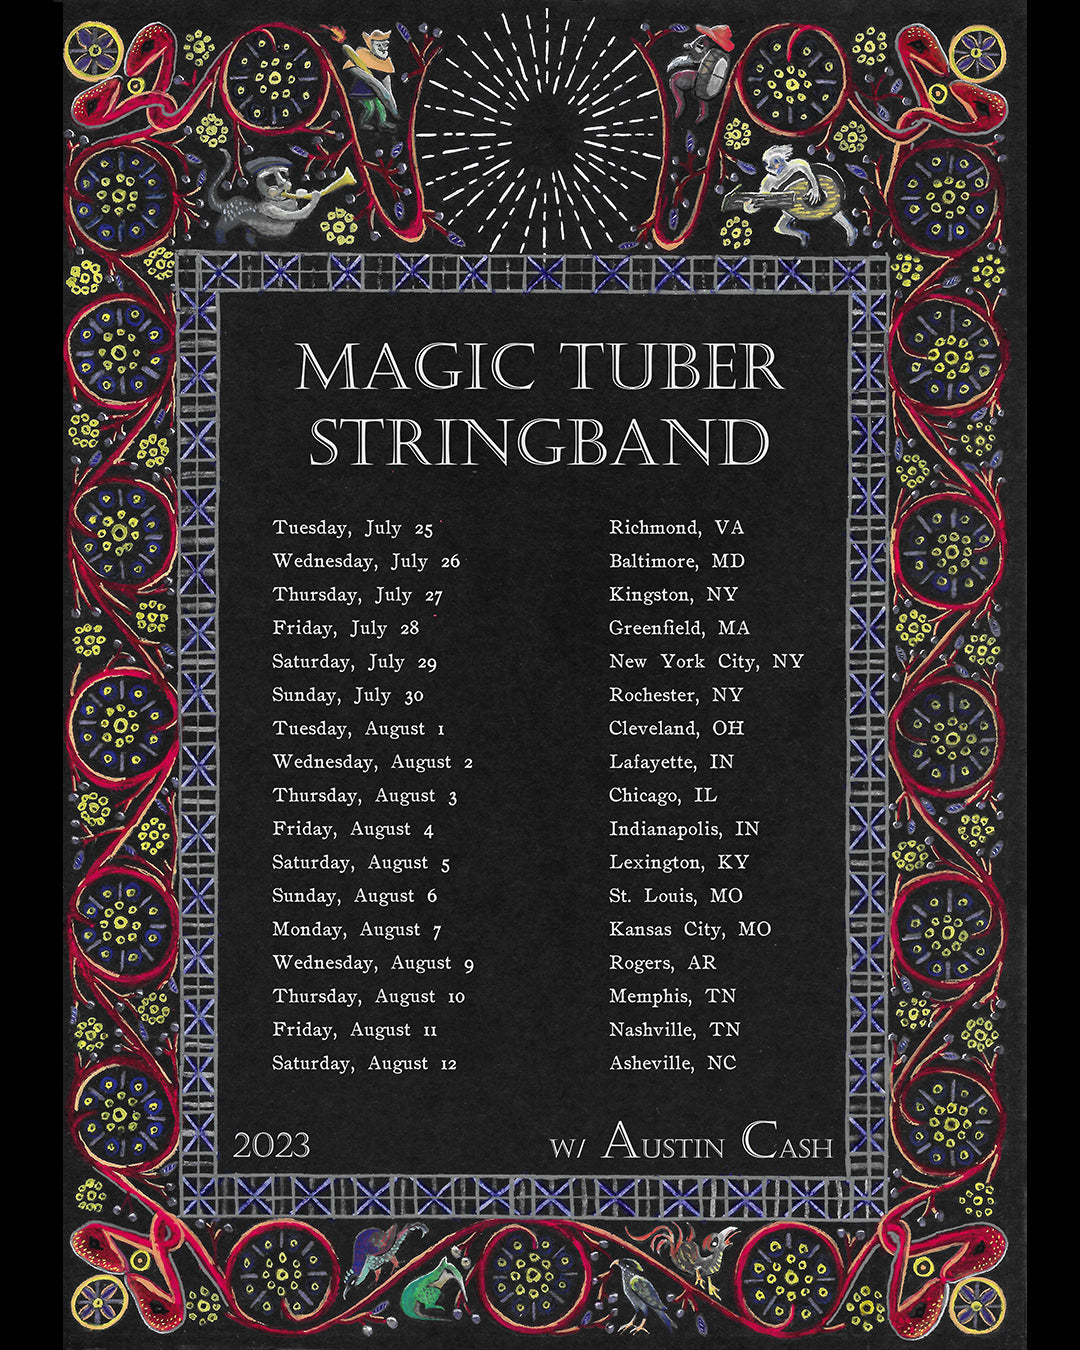 Austin Cash on tour with Magic Tuber Stringband July/Aug